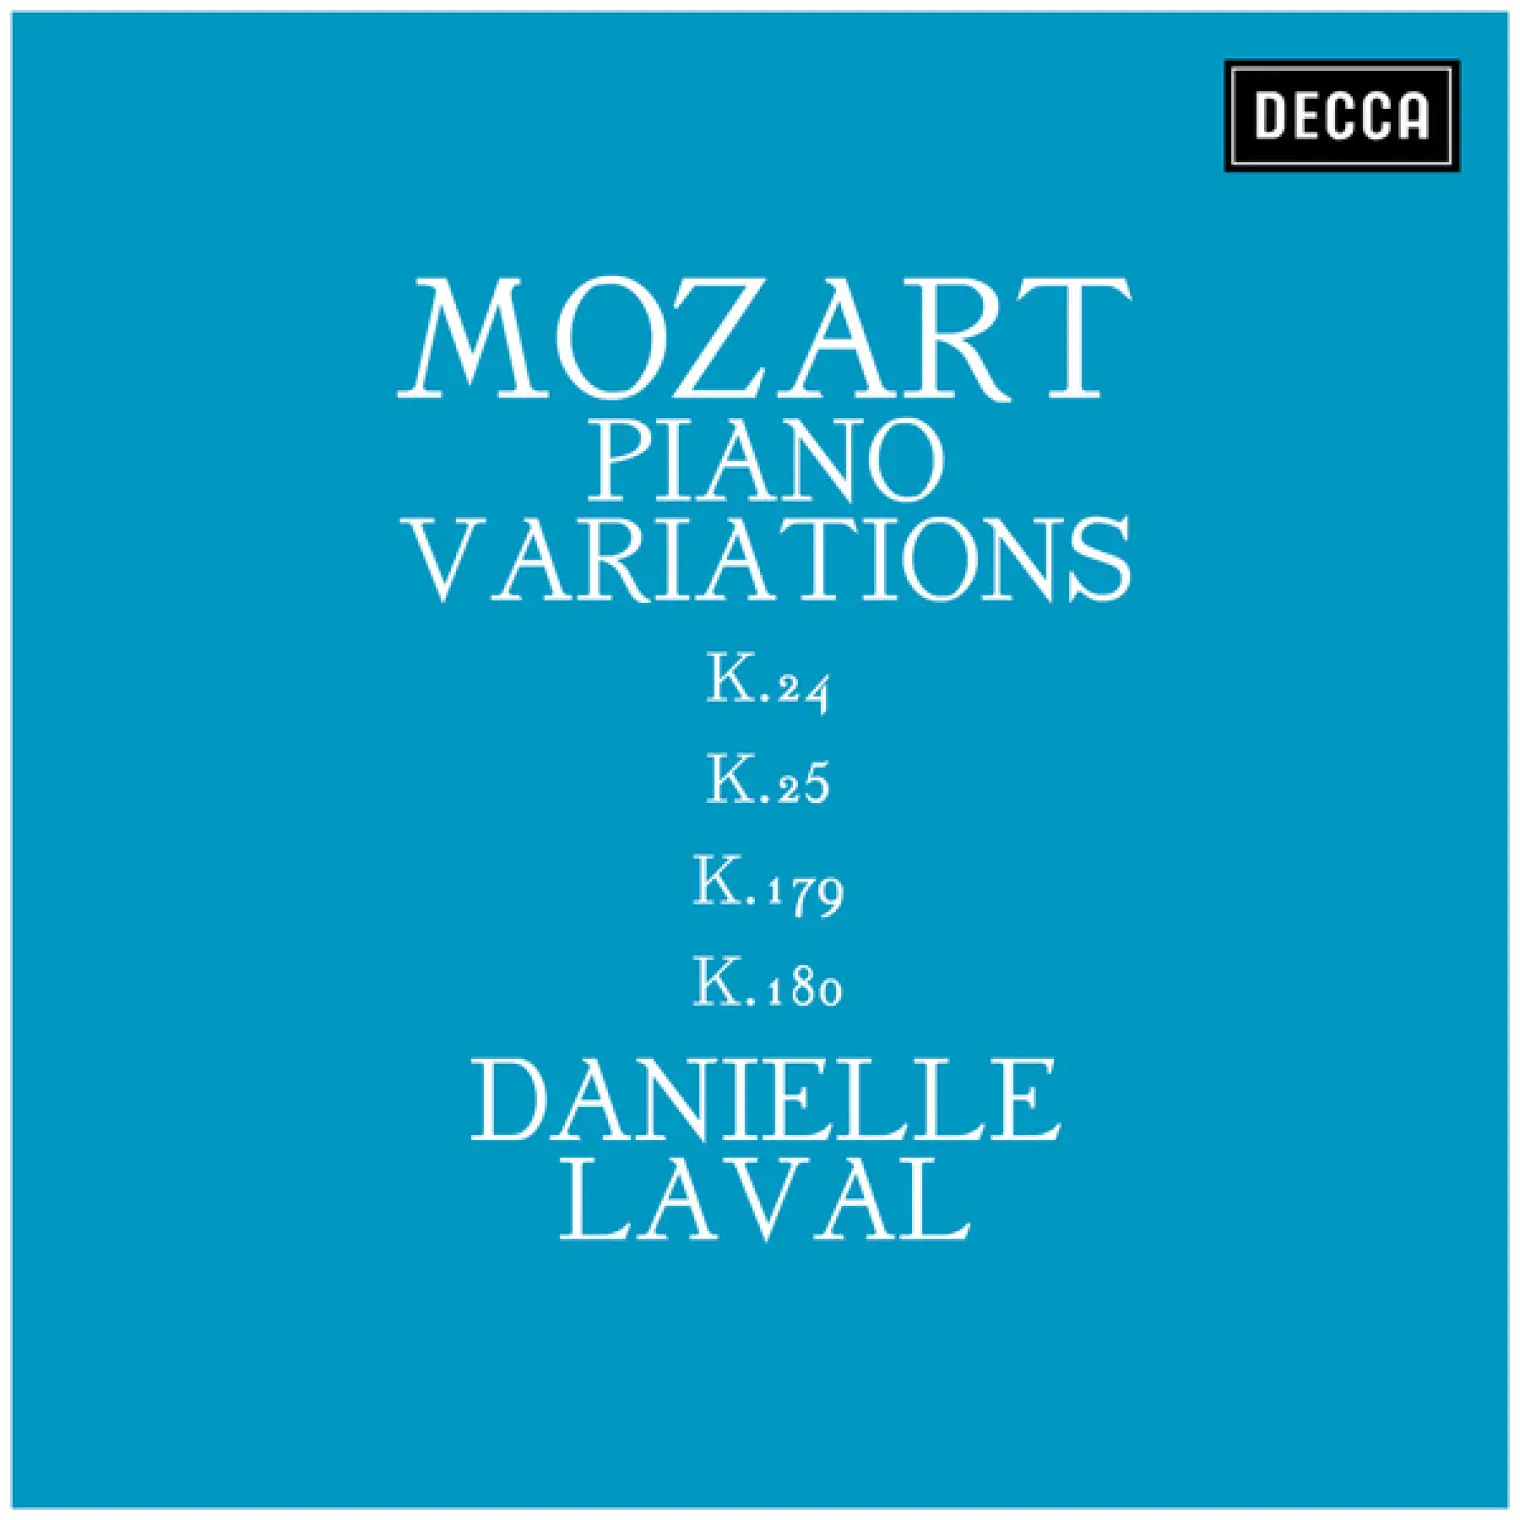 Mozart: Piano Variations K.24, K.25, K.179, K.180 -  Danielle Laval 